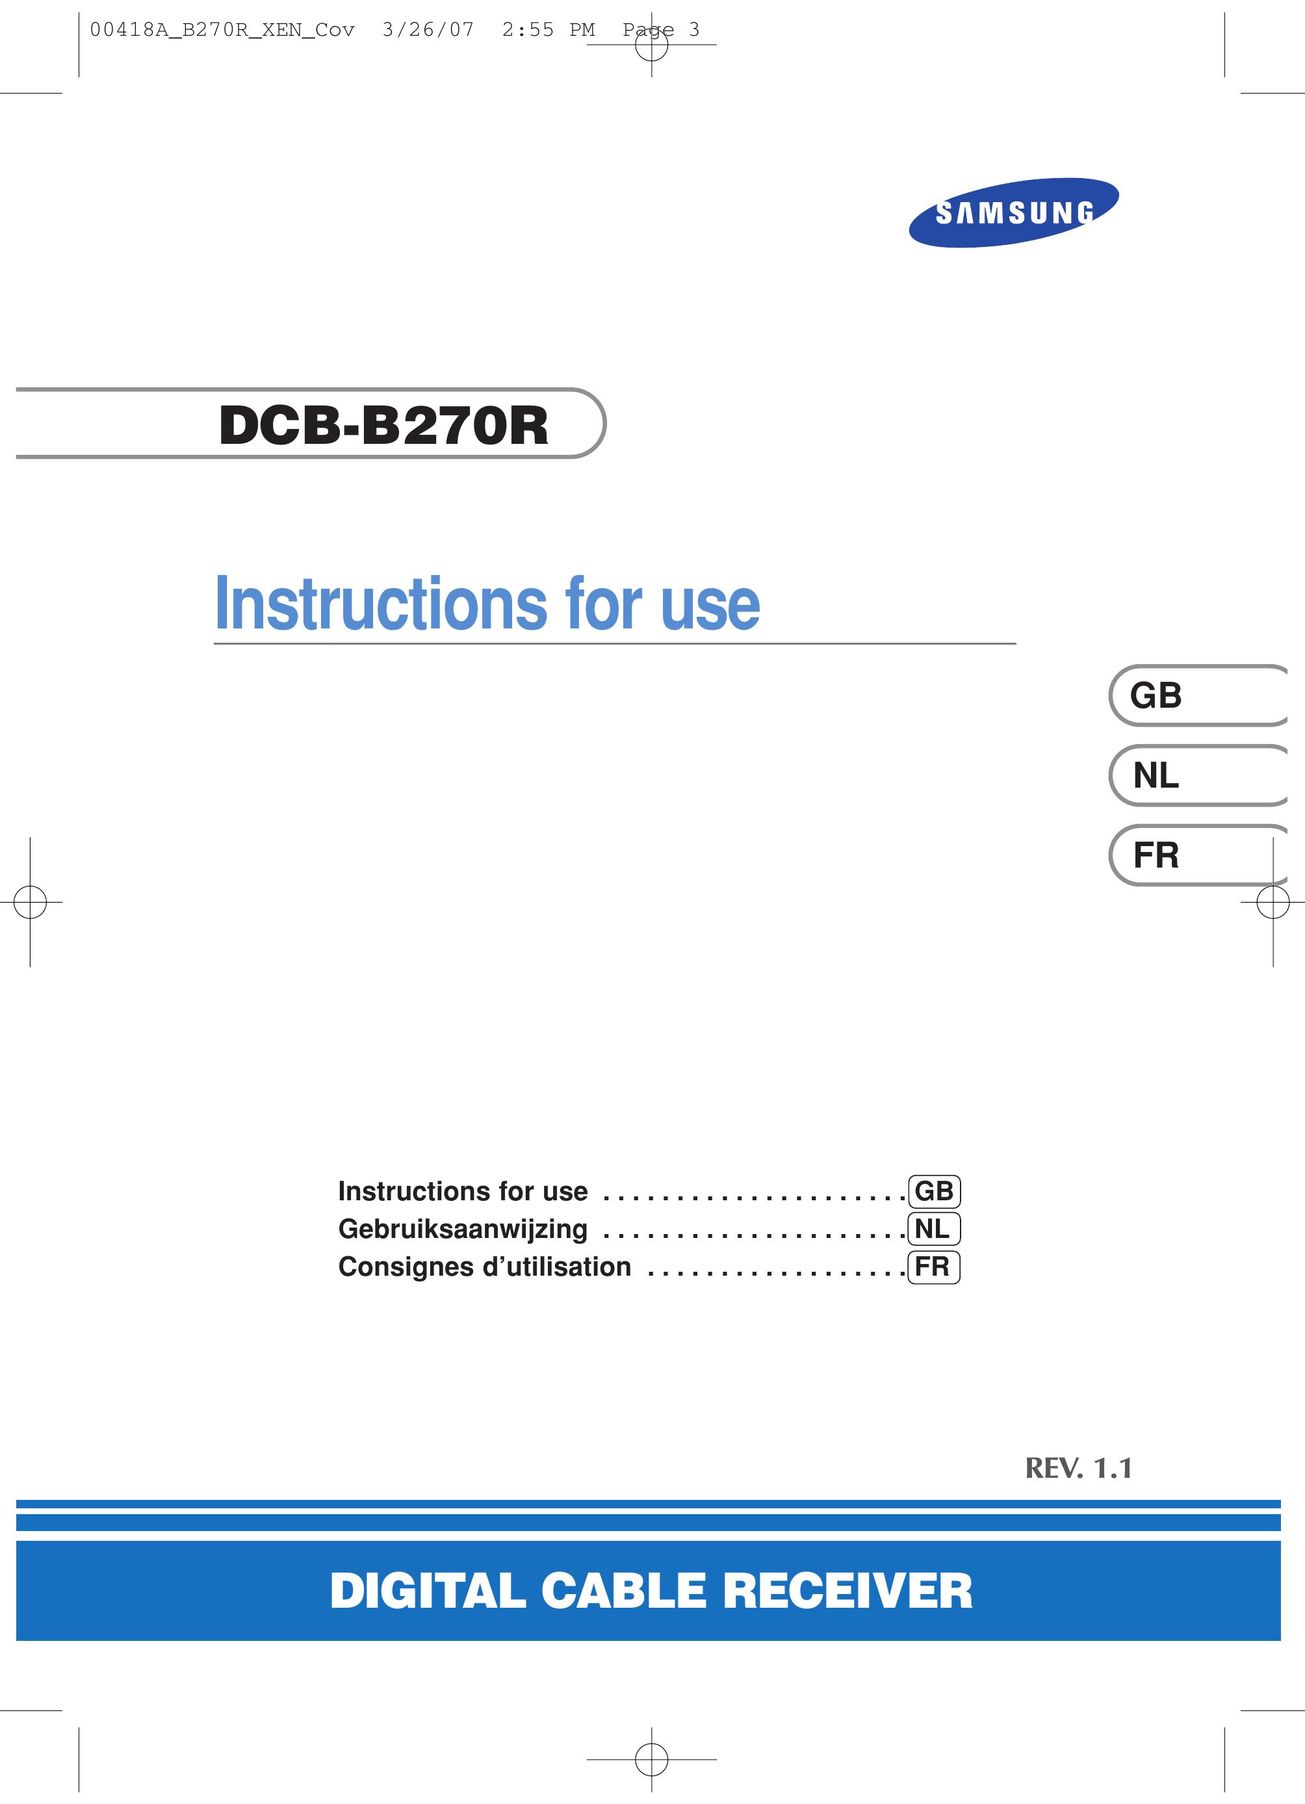 Samsung DCB-B270R Cable Box User Manual